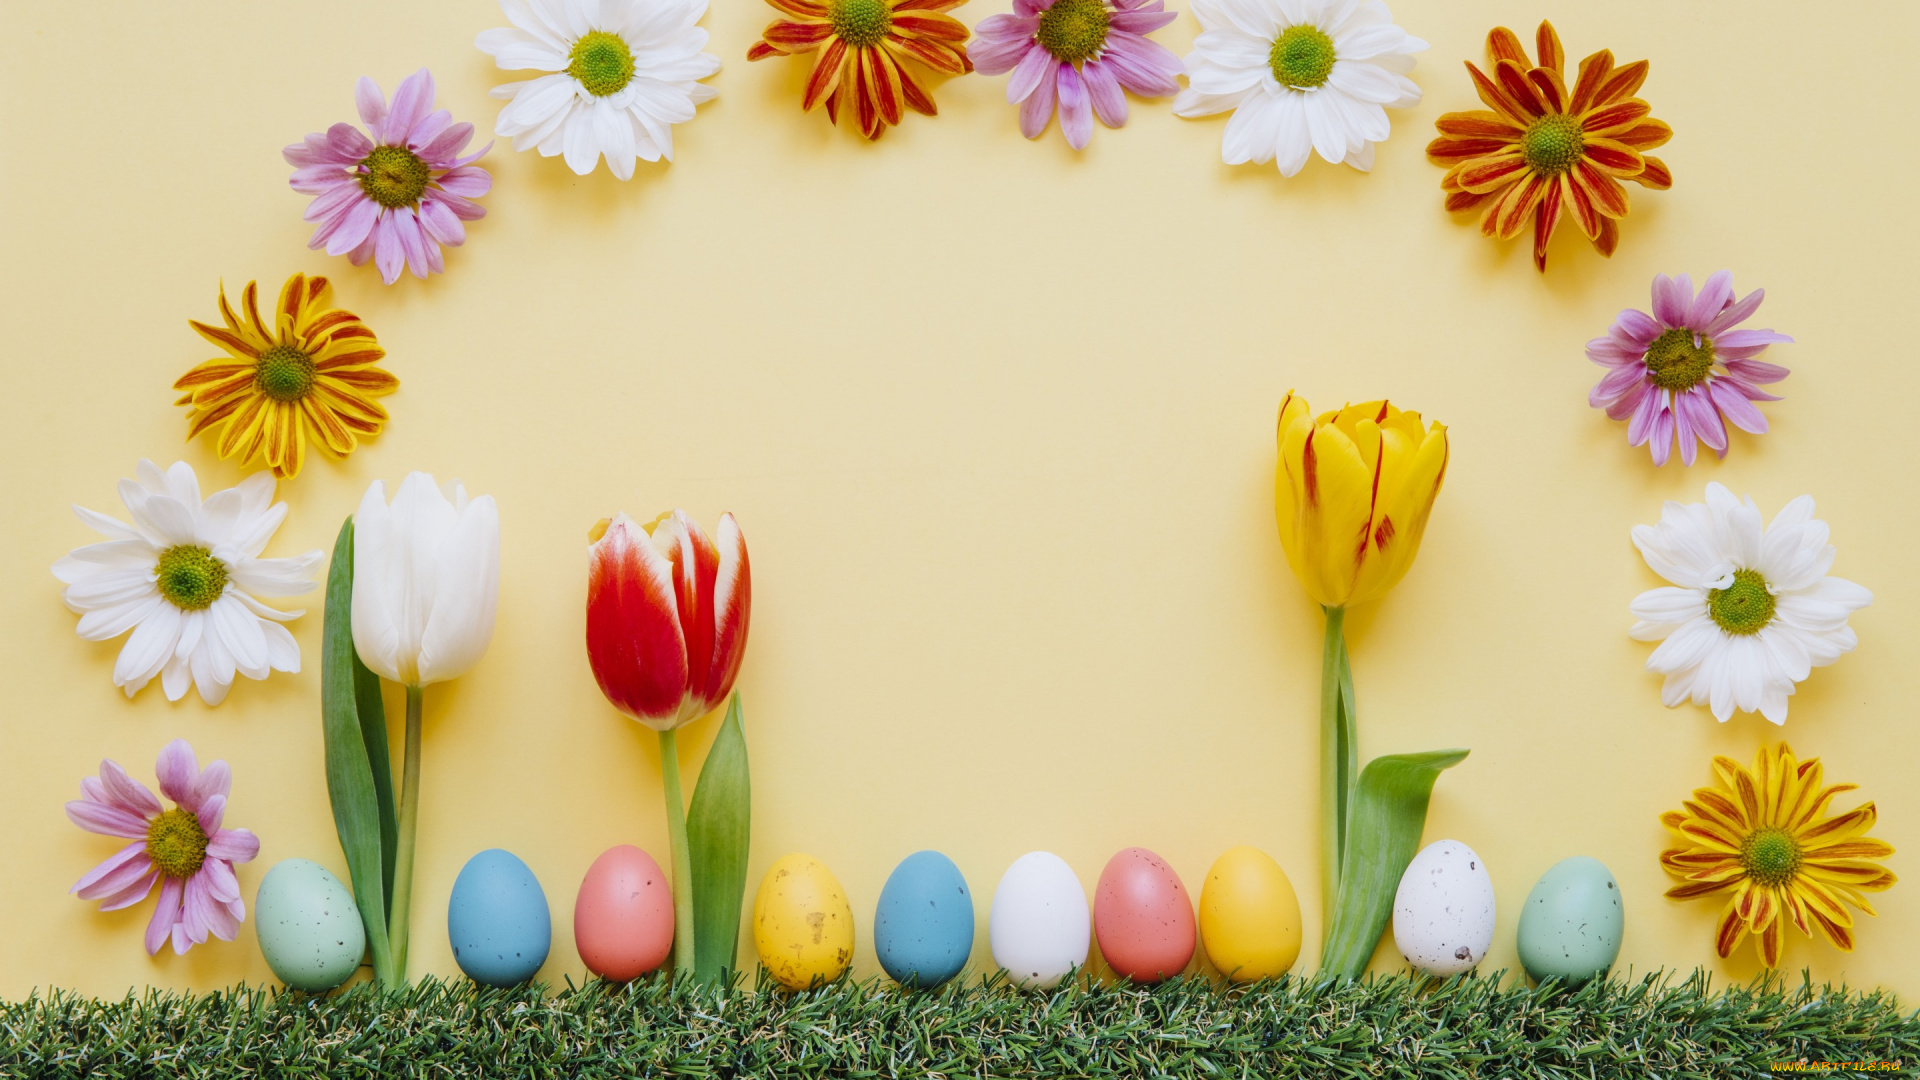 праздничные, пасха, яйца, крашеные, decoration, happy, хризантемы, tulips, тюльпаны, easter, colorful, трава, весна, цветы, eggs, spring, flowers